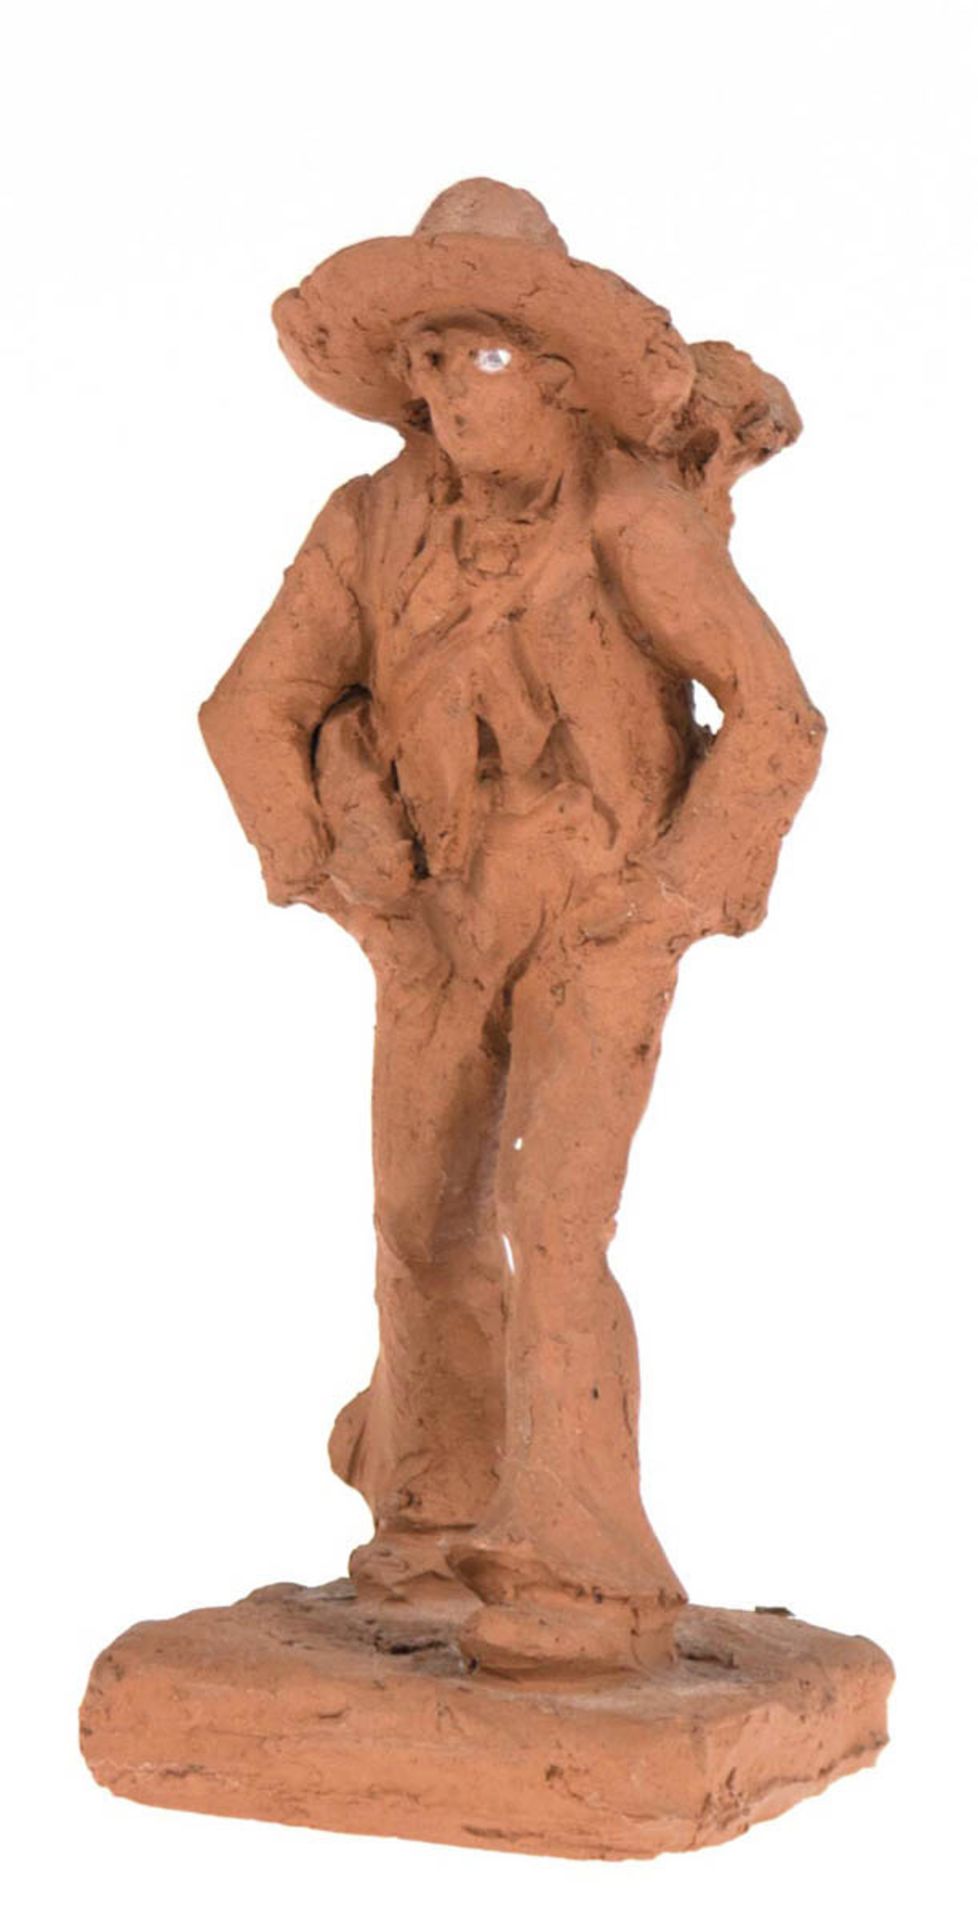 Terrakotta-Figur "Wandergeselle", undeutl. monogr., H. 15 cm- - -23.80 % buyer's premium on the